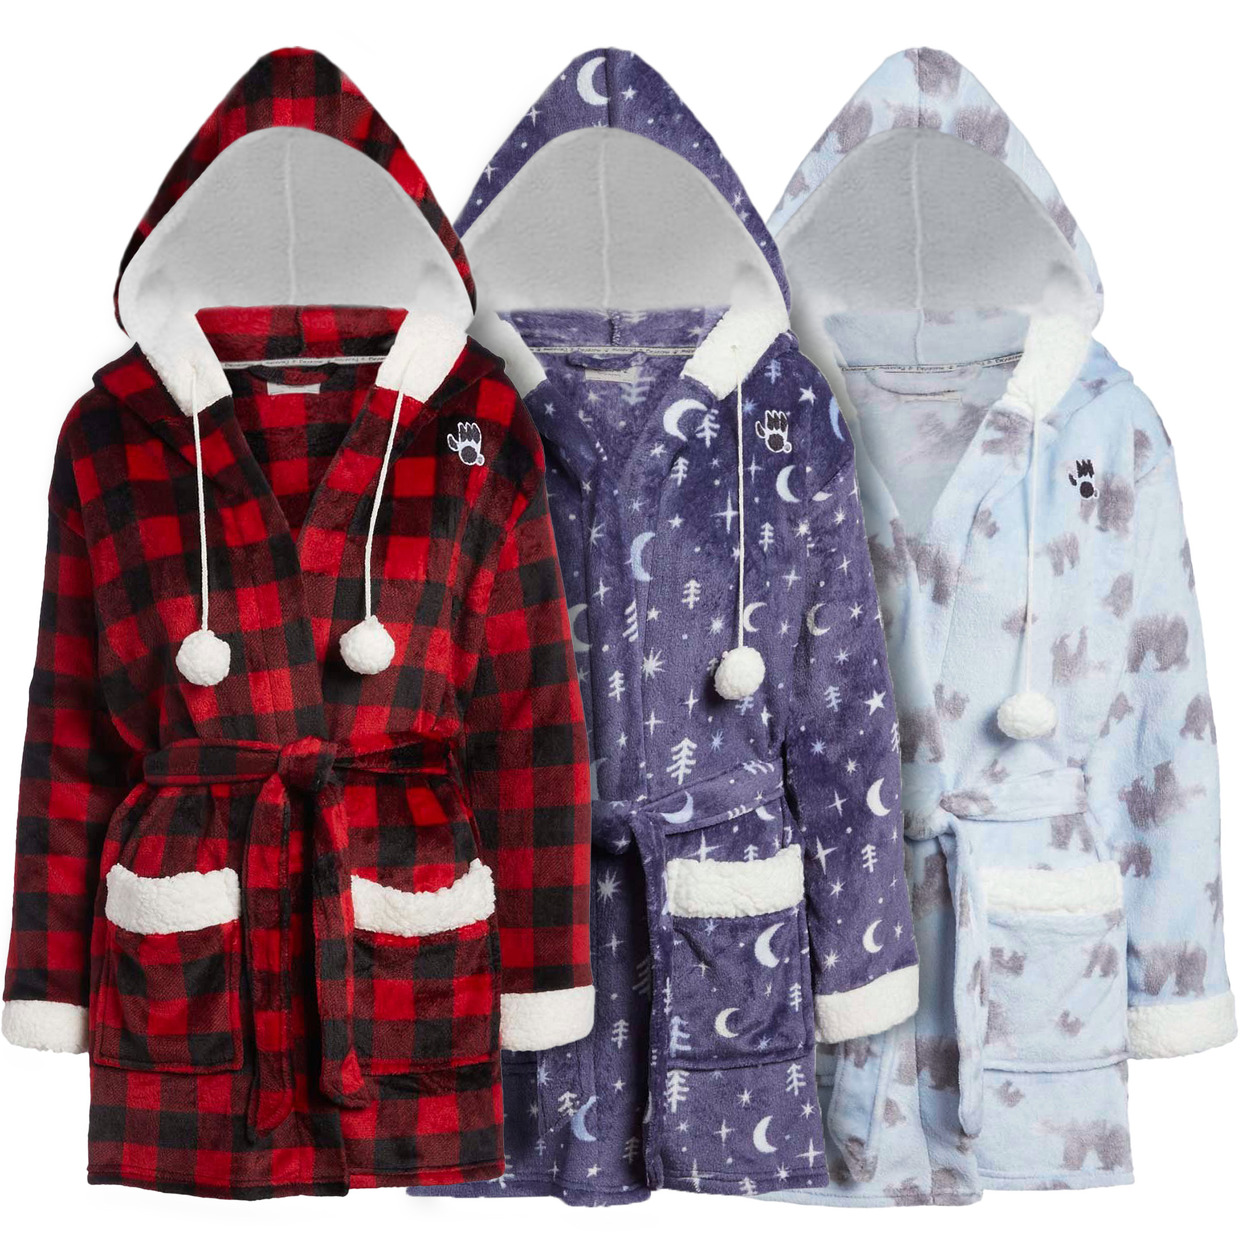 Women's Ultra-Soft Plush Winter Warm Cozy Sherpa Lined Trim Print Robe With Pockets And Hood - Winter Grey, Medium